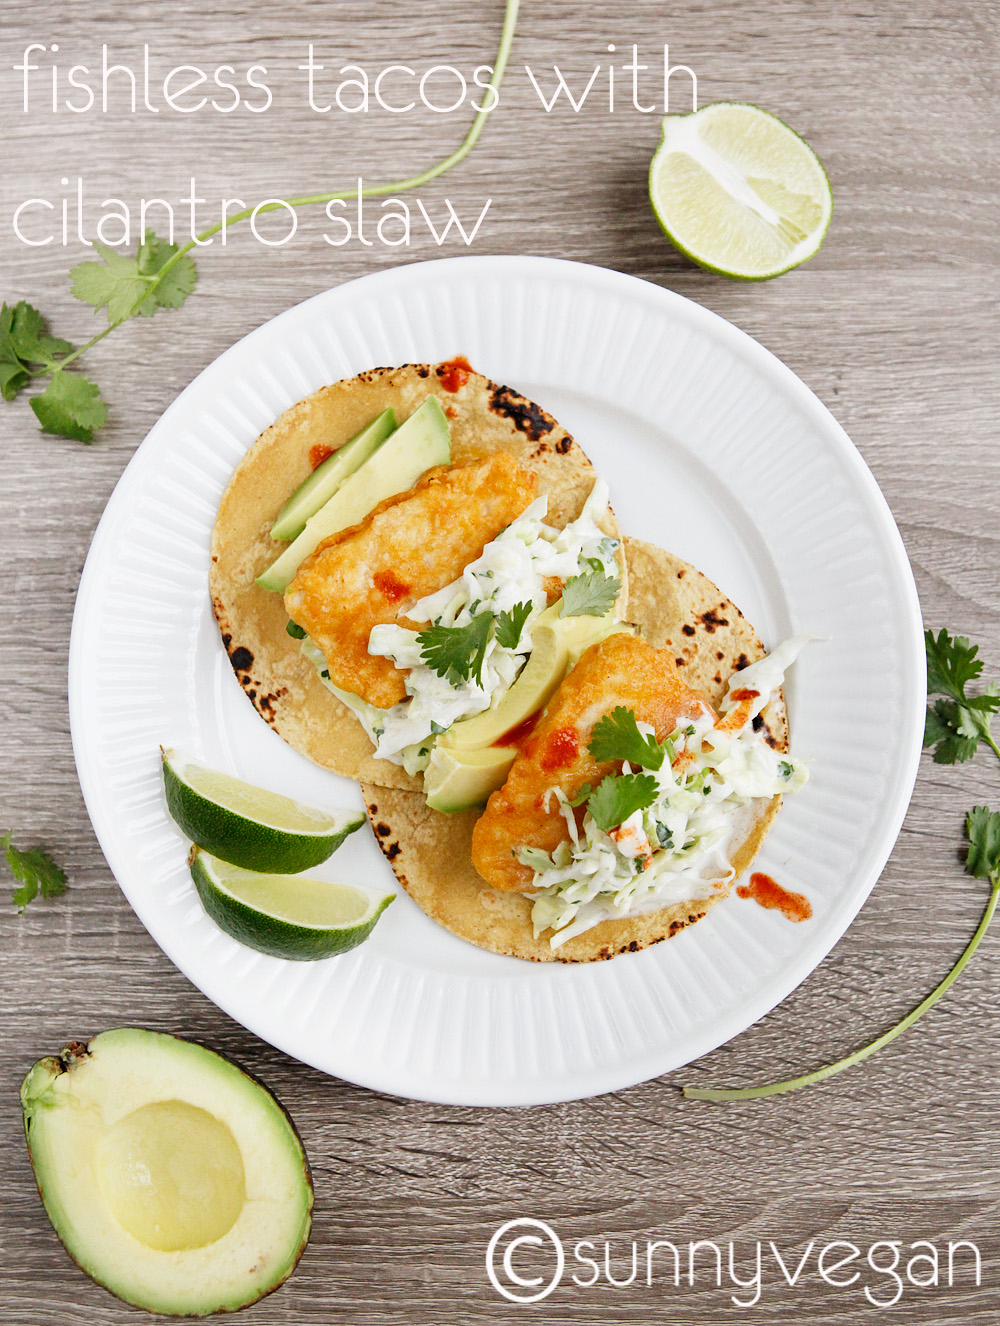 fishelss taco cilantro slaw recipe from sunnyvegan #OMGardein #meetchef